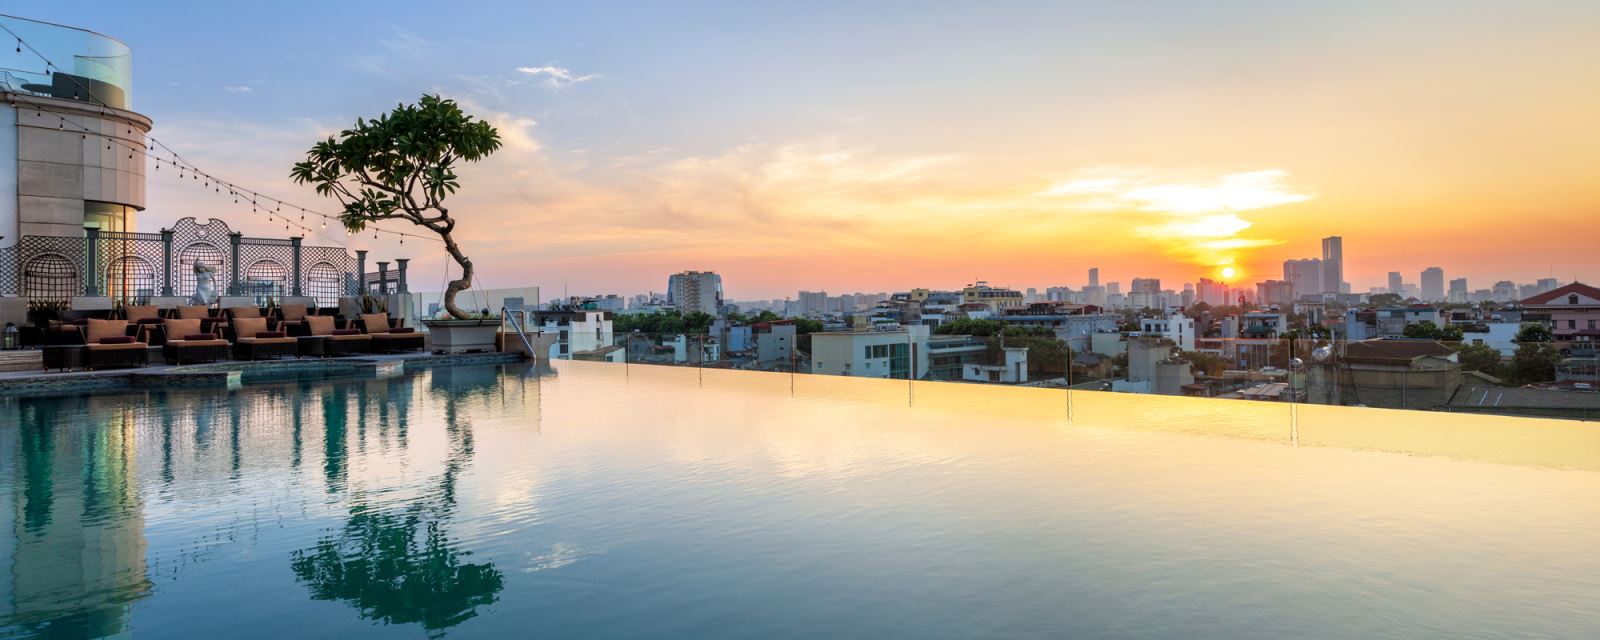 Best Hotels in Hanoi, Vietnam: Budget to Luxury Options | TouristSecrets